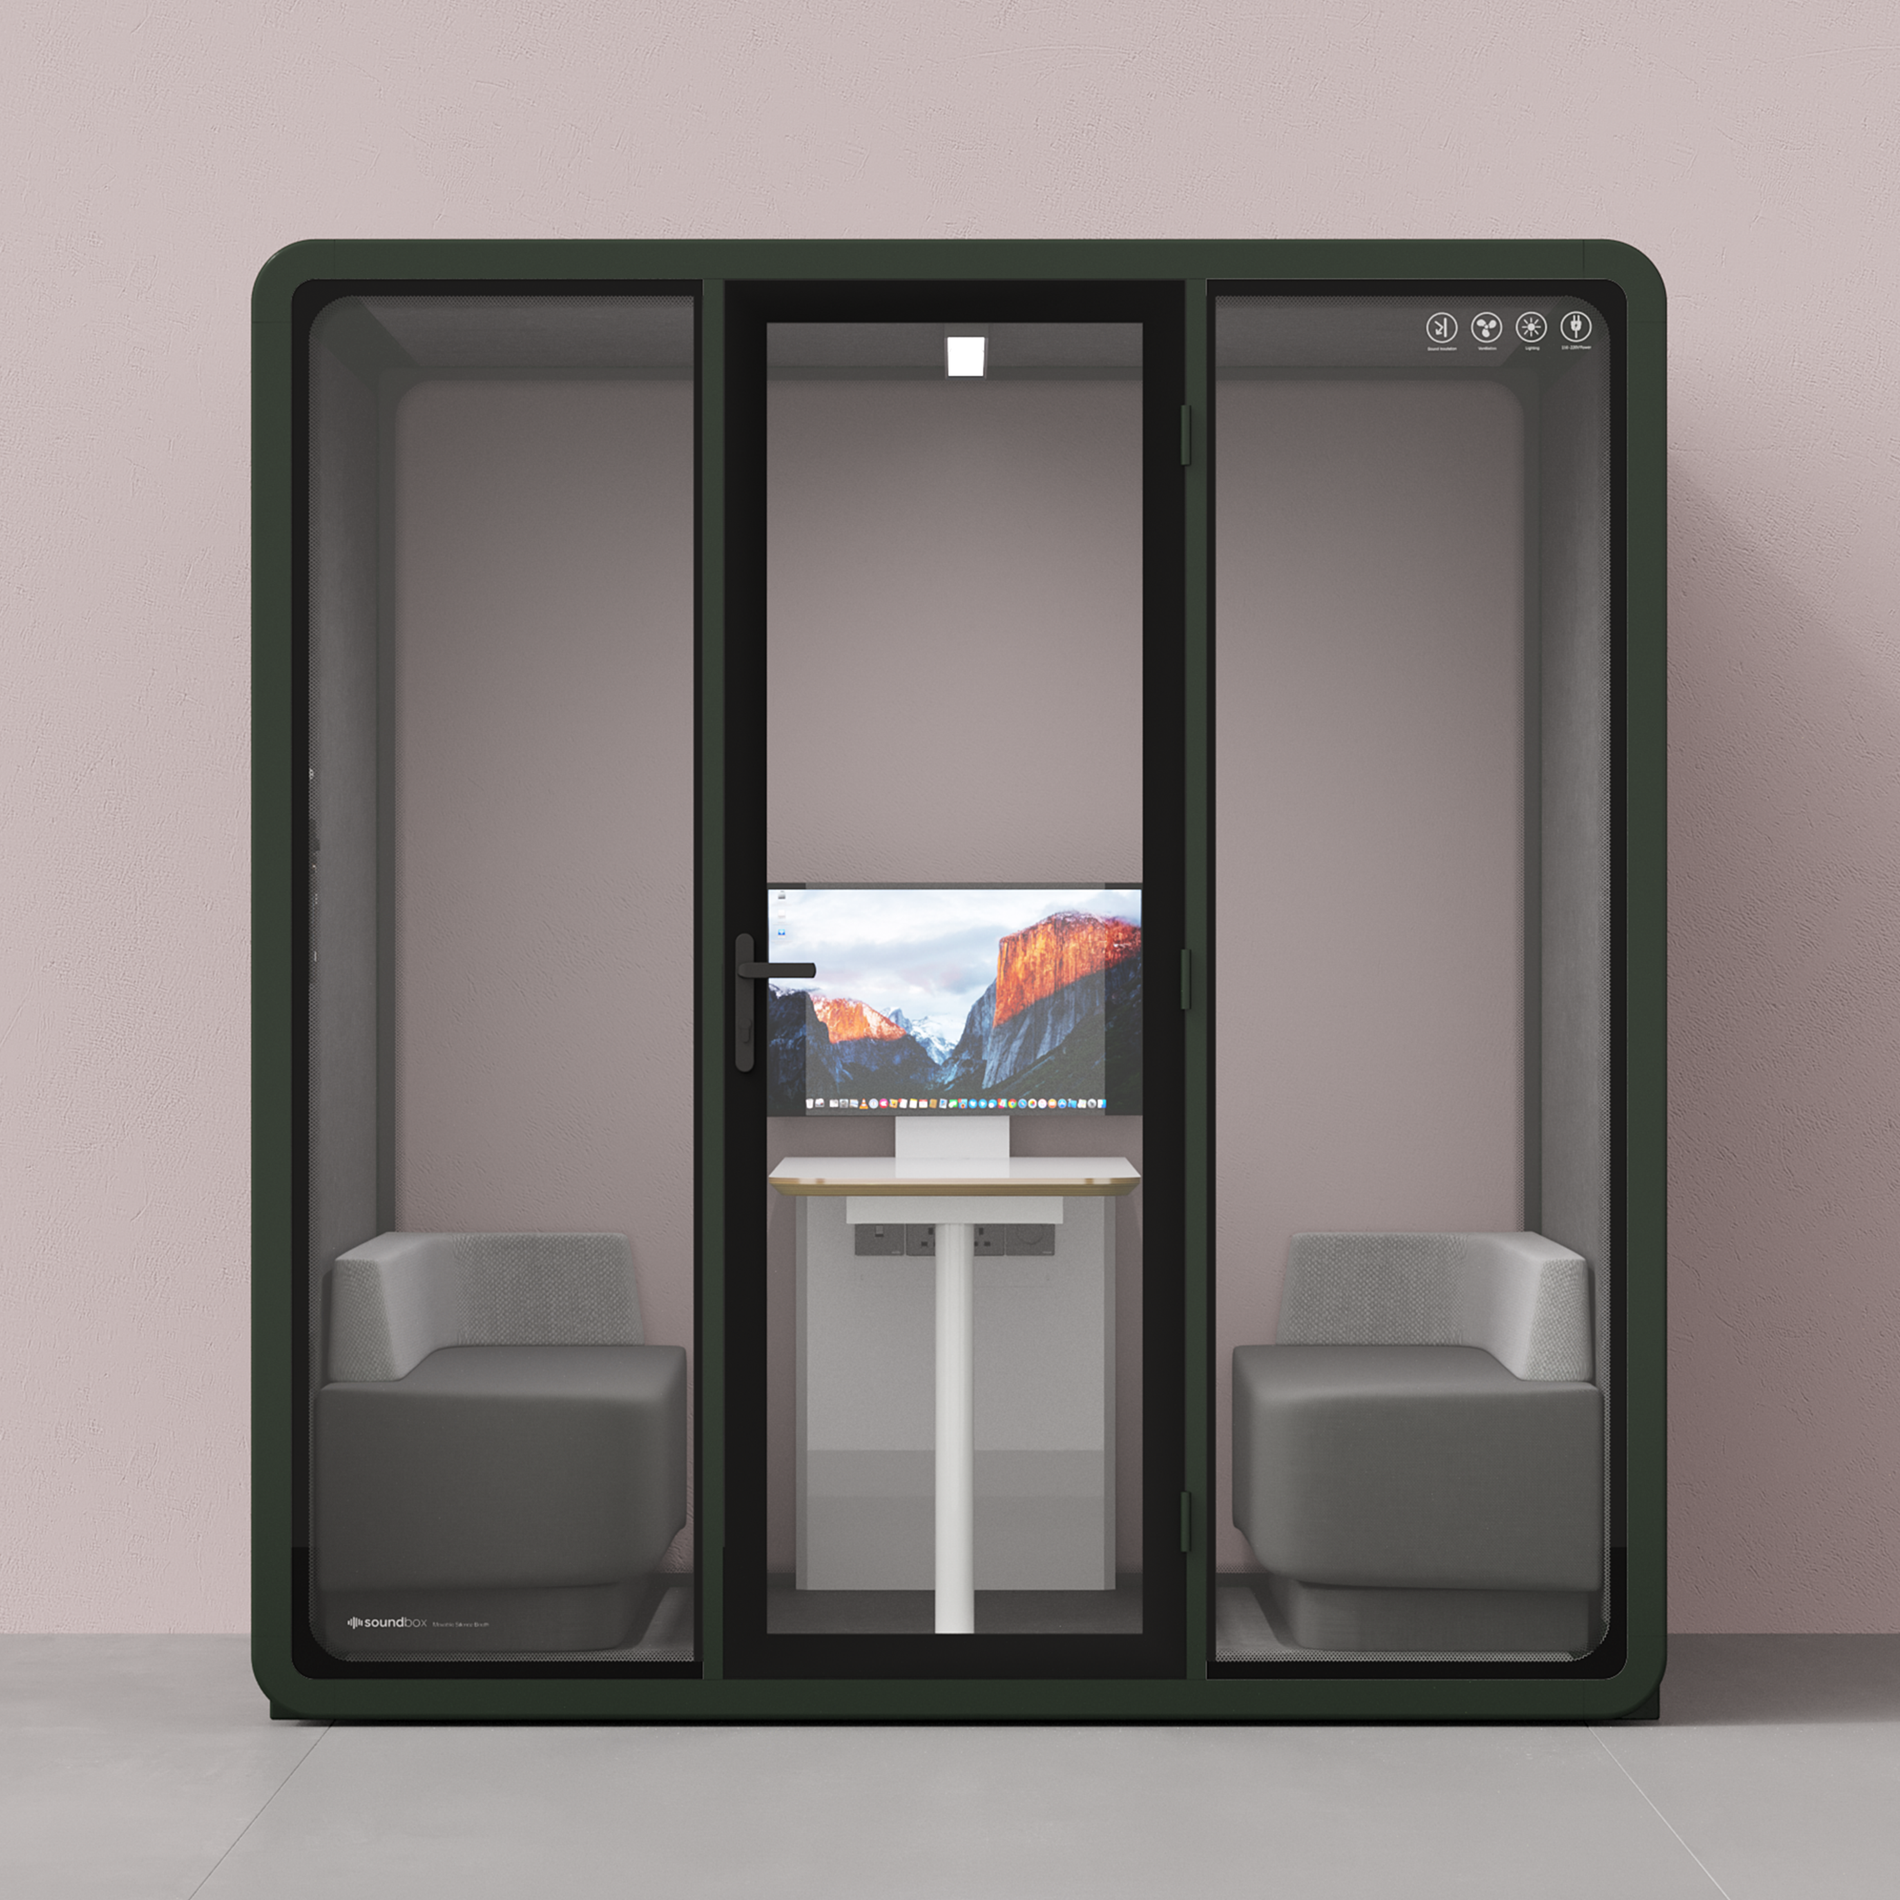 Quell - Coworker - 6-osobowa kabina konferencyjnaDark Green / Dark Grey / Furniture Set 1